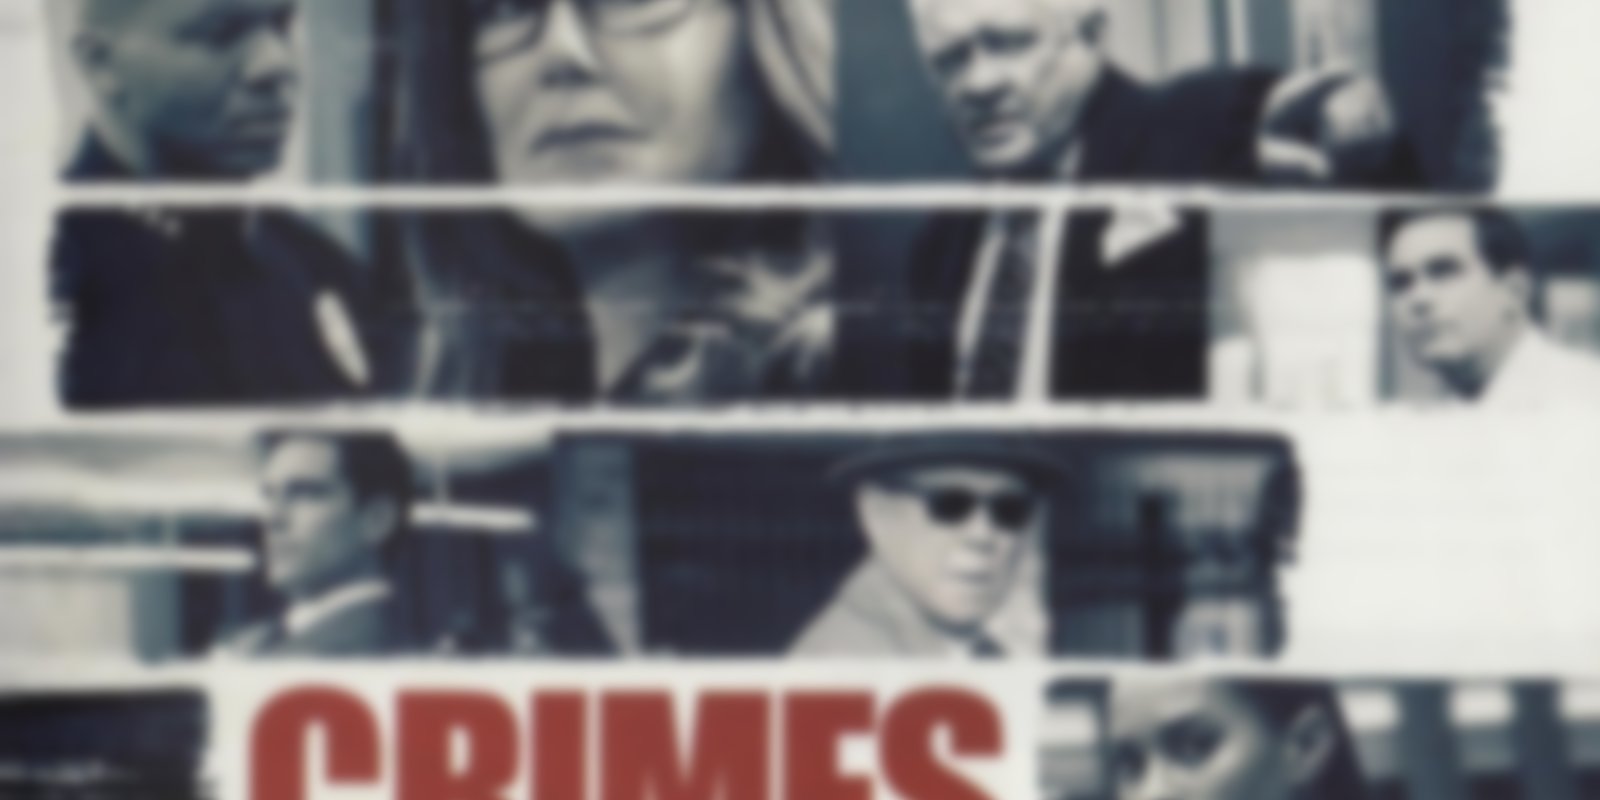 Major Crimes - Staffel 6